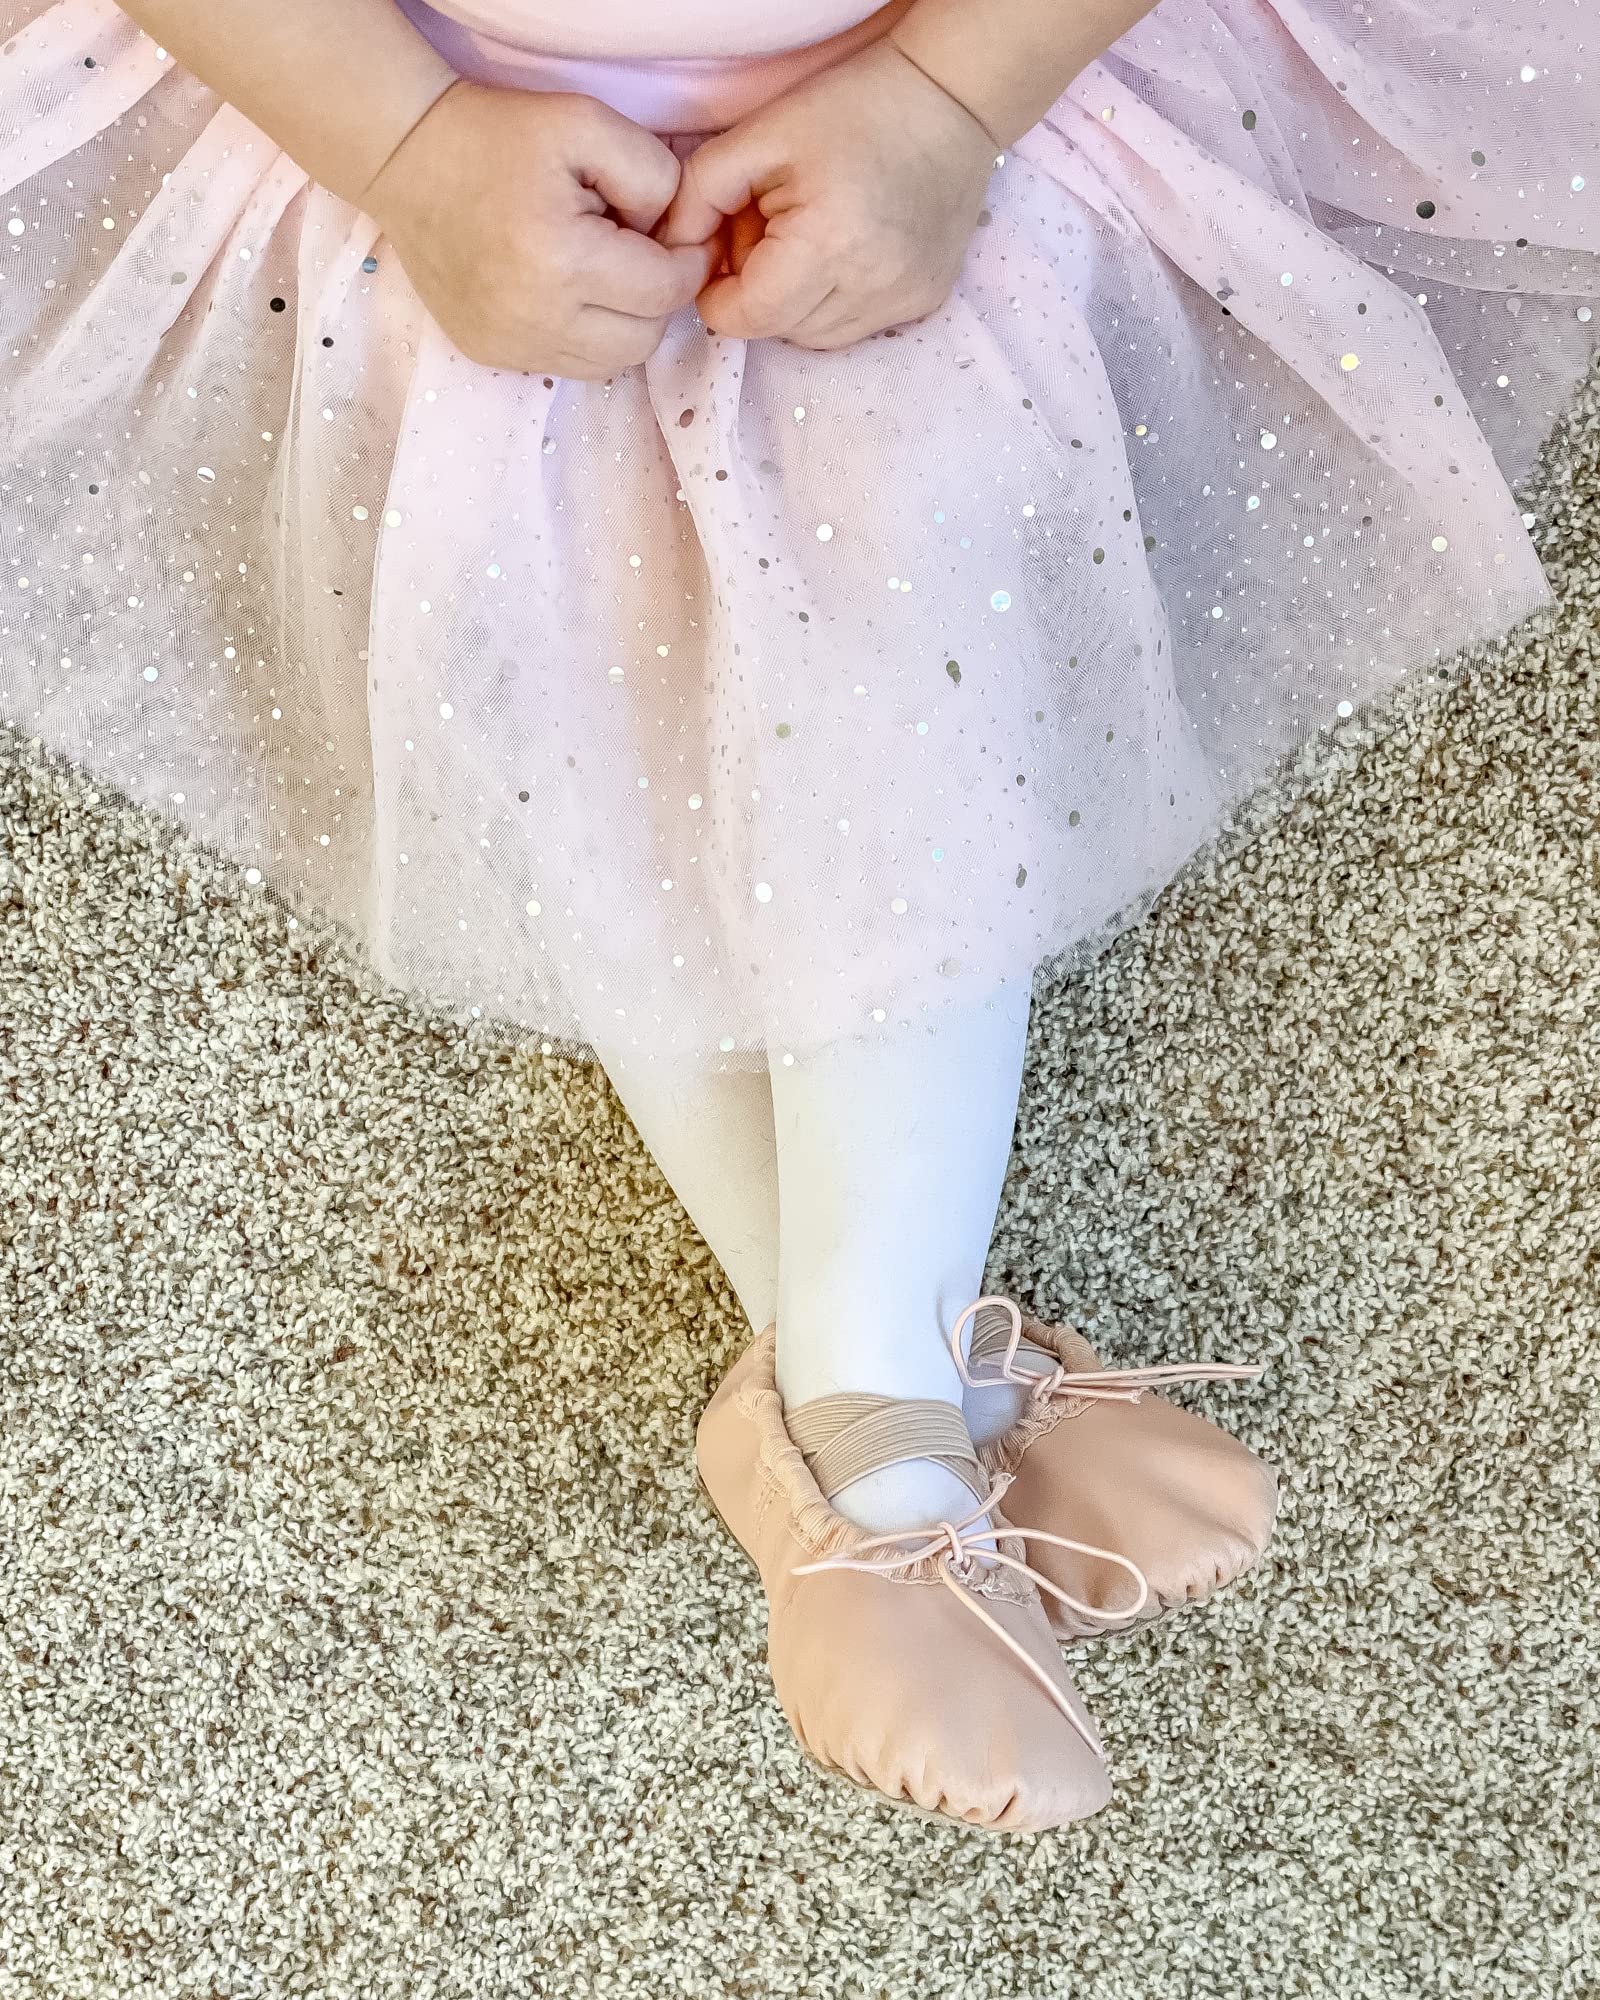 Stelle Ballet Shoes for Girls Toddler Genuine Leather Ballet Dance Slippers for Toddler/Little/Big Kids/Boys